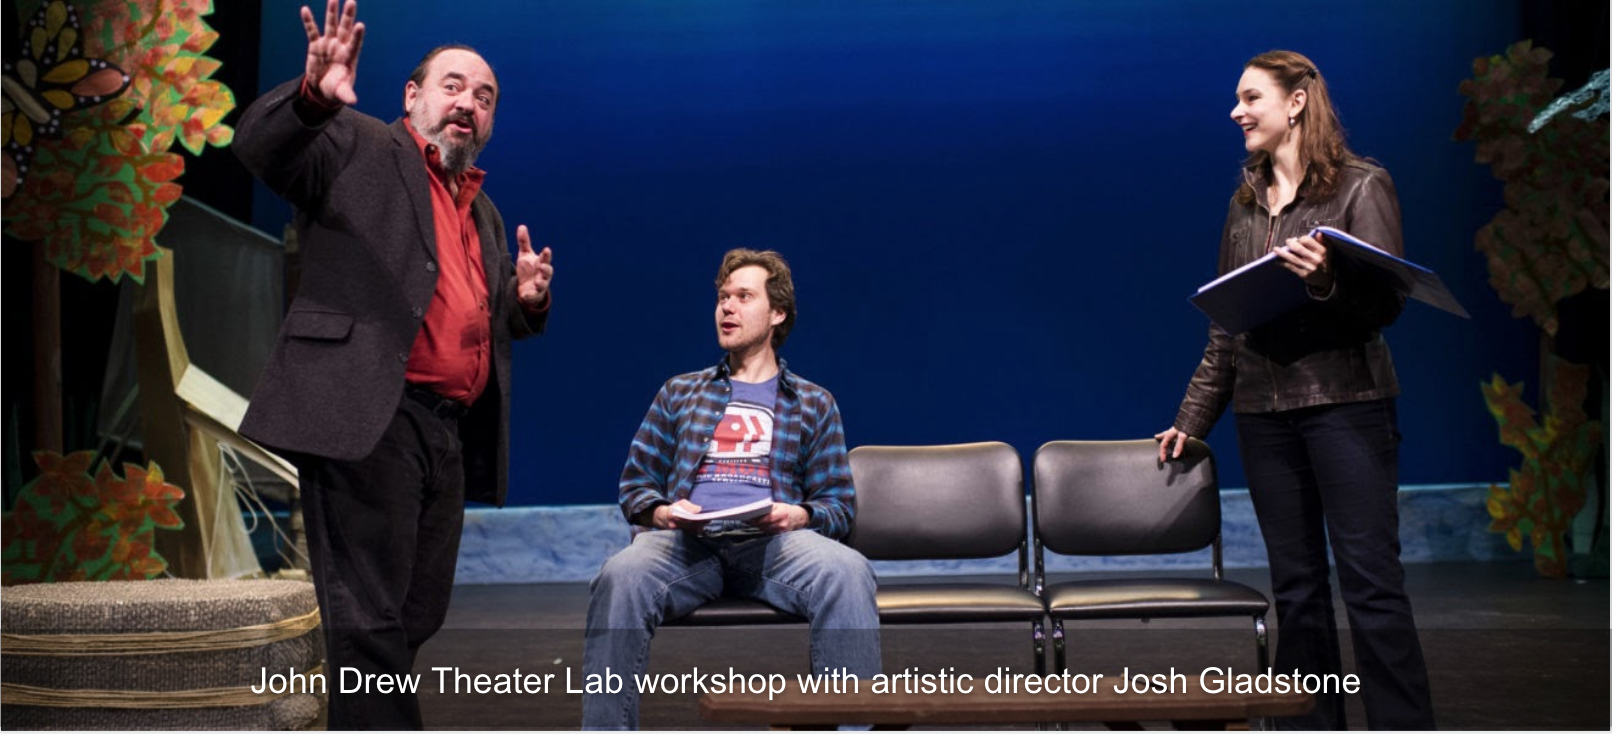 the-creative-process-guild-hall-josh-gladstone-john-drew-theater-lab.png